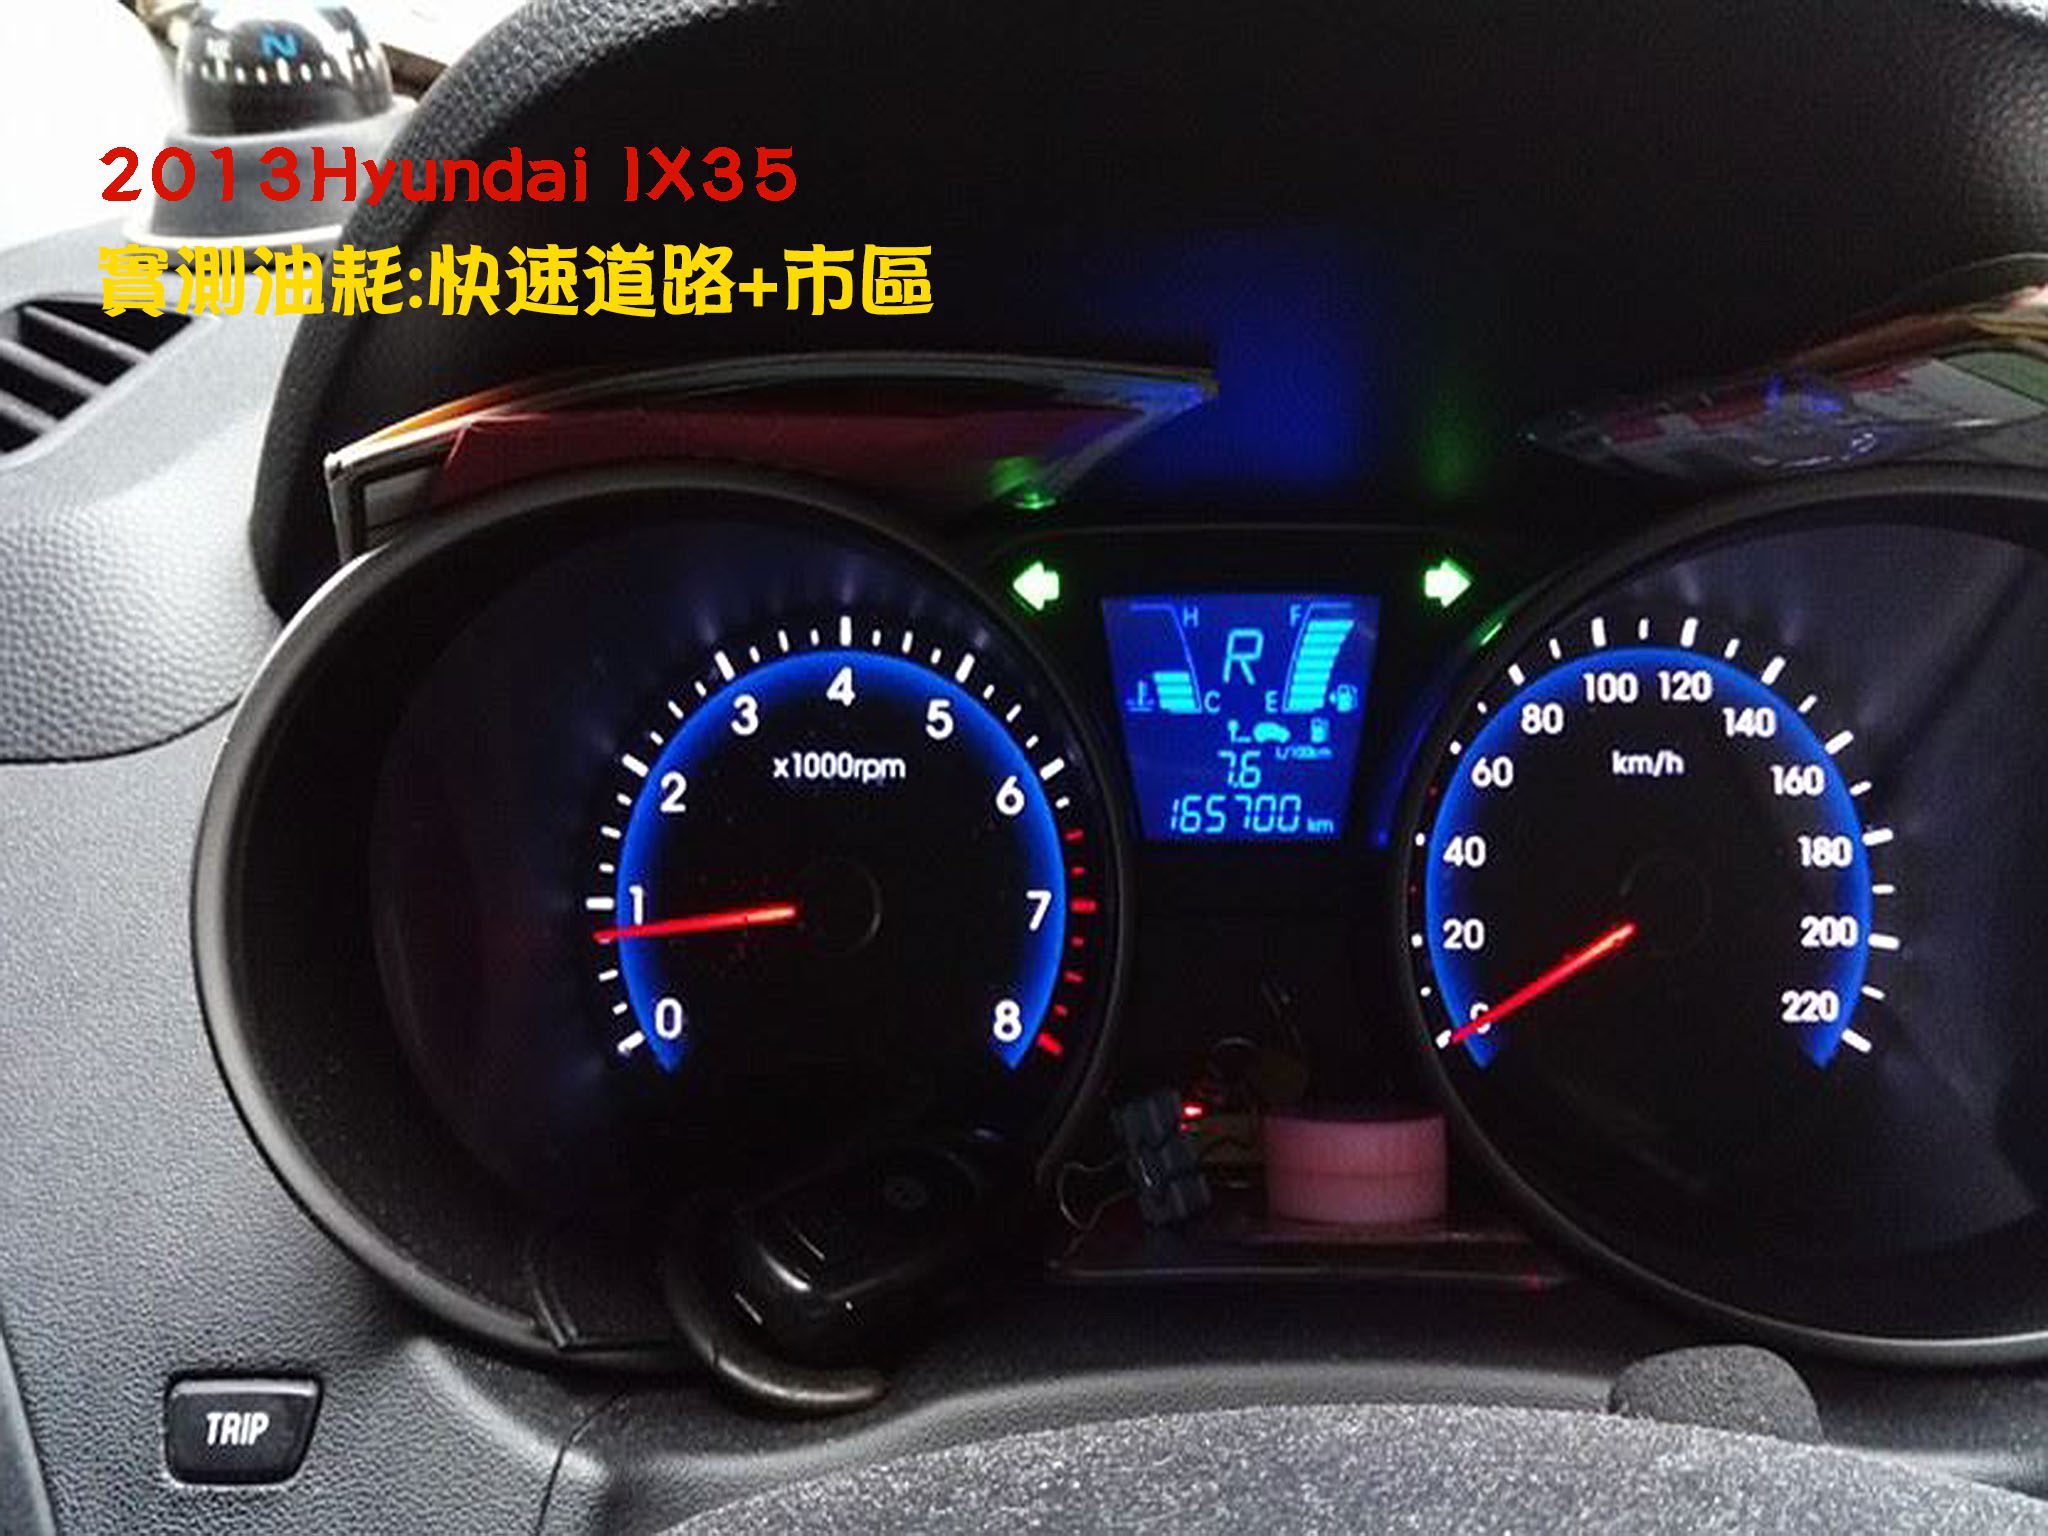 2013 HyundaiIX35混和油耗